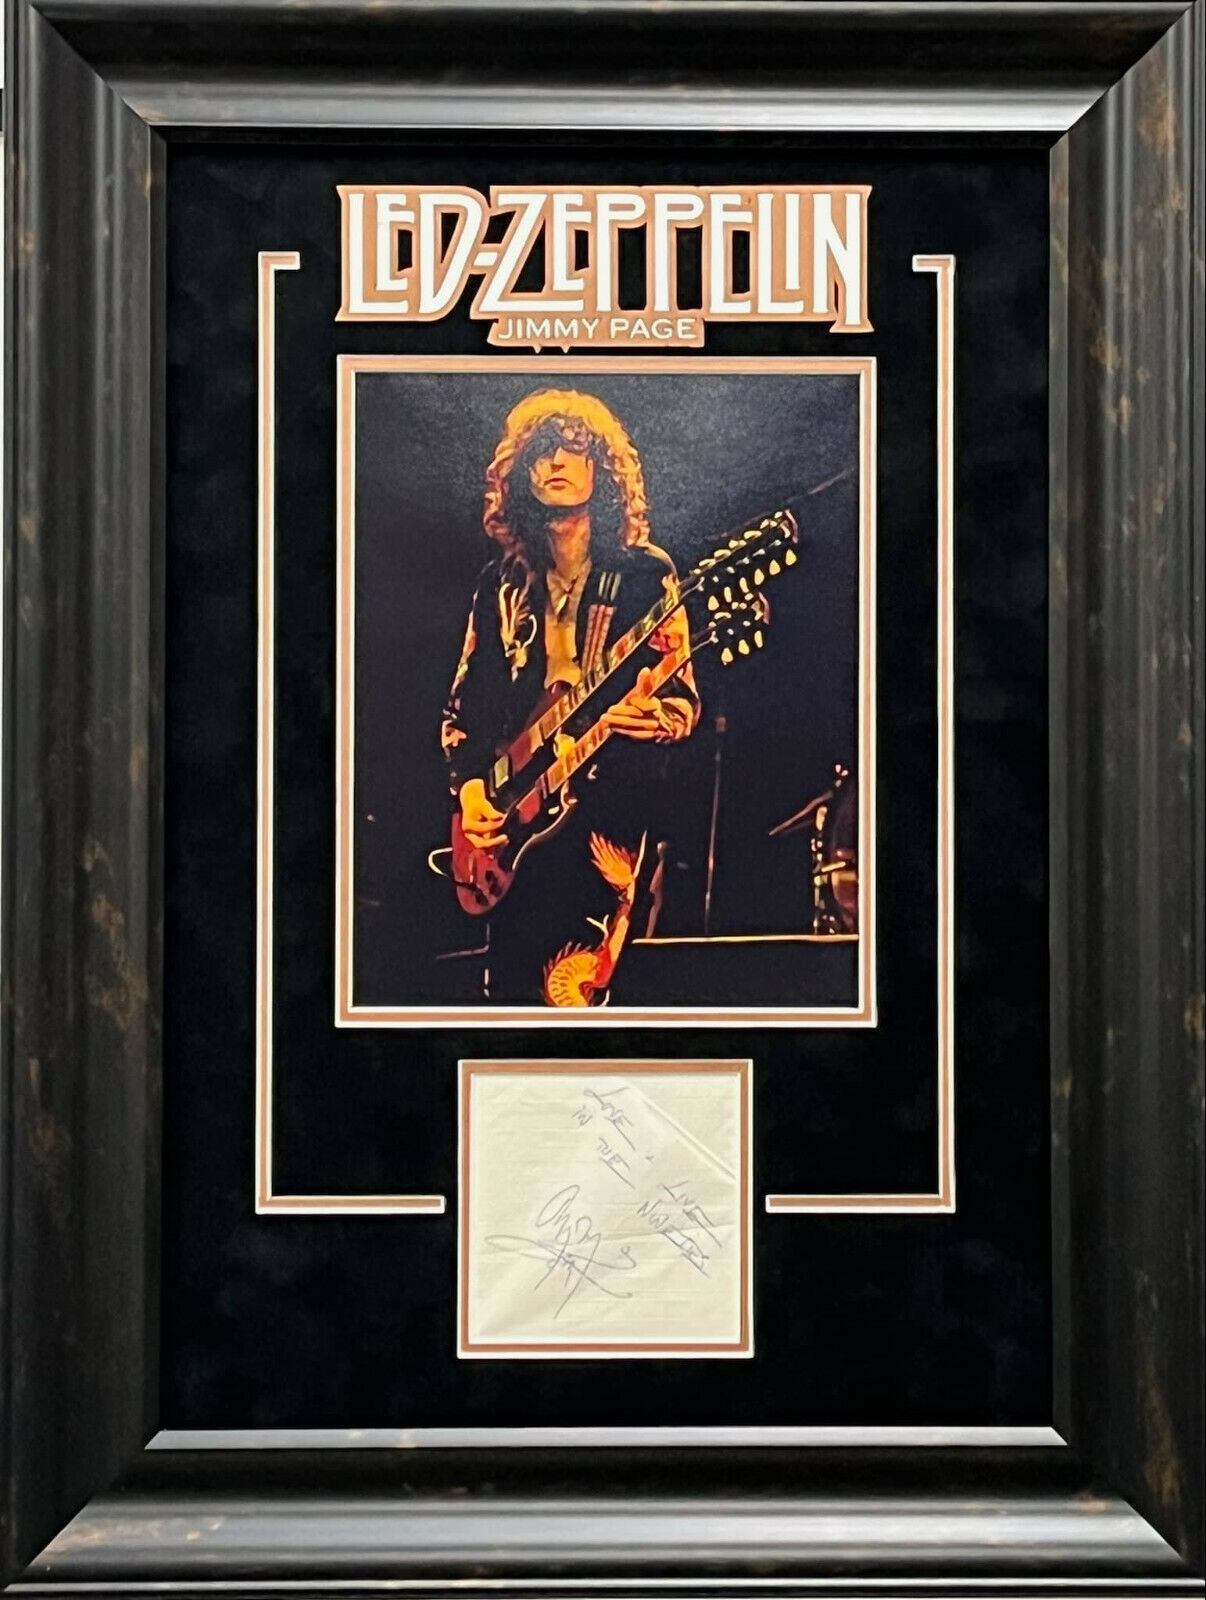 Jimmy Page Autographed Signed Framed Photo Display Autograph, Led Zeppelin, Guitar, JSA Loa 